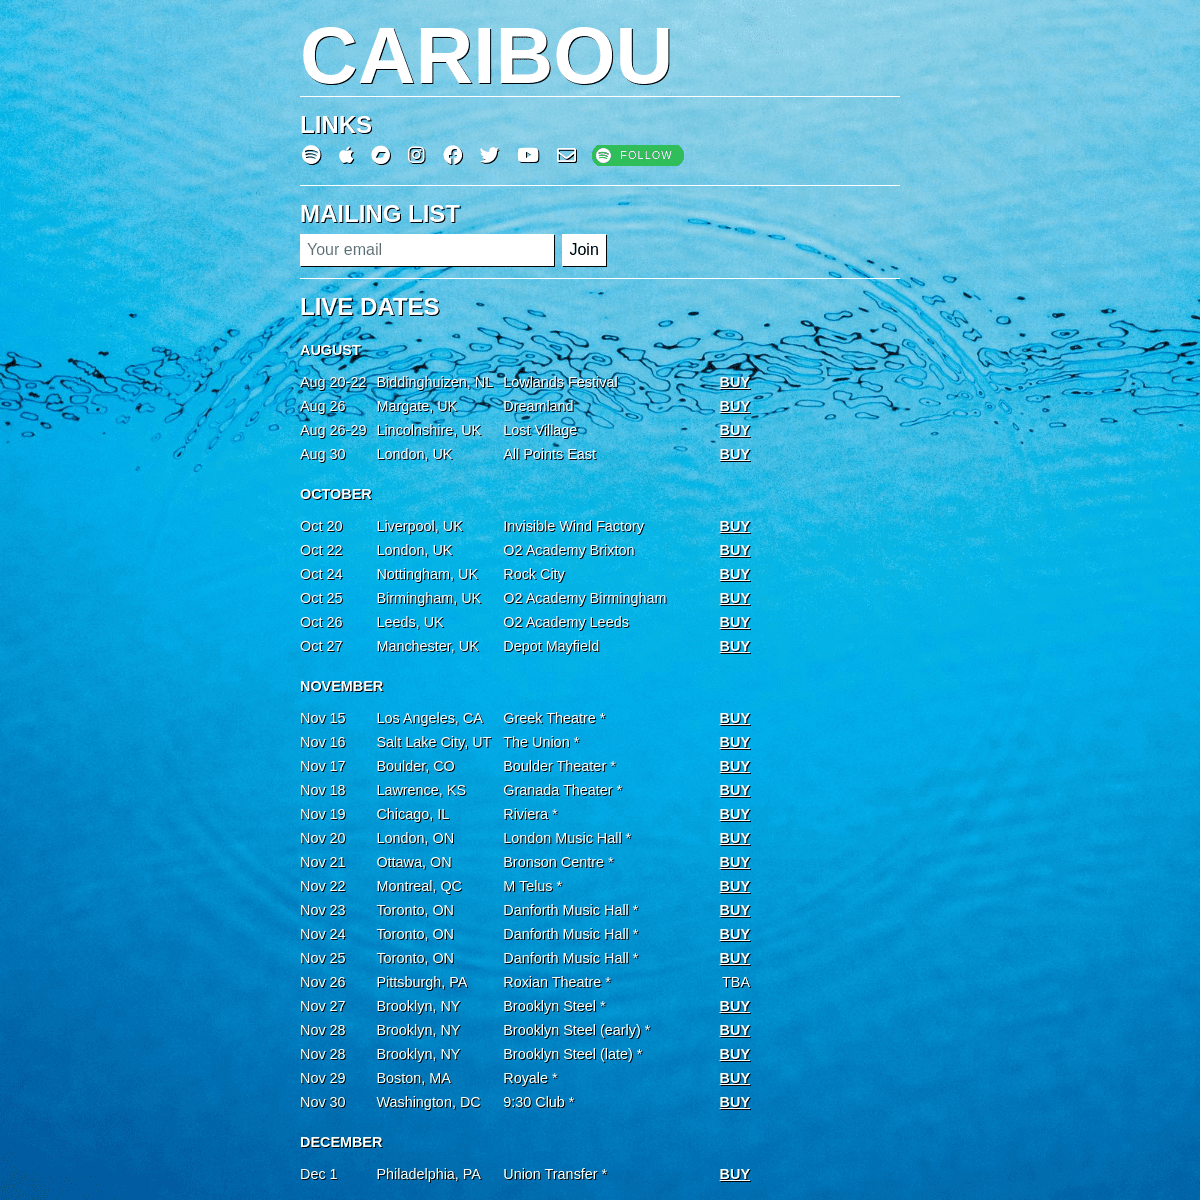 A complete backup of https://caribou.fm